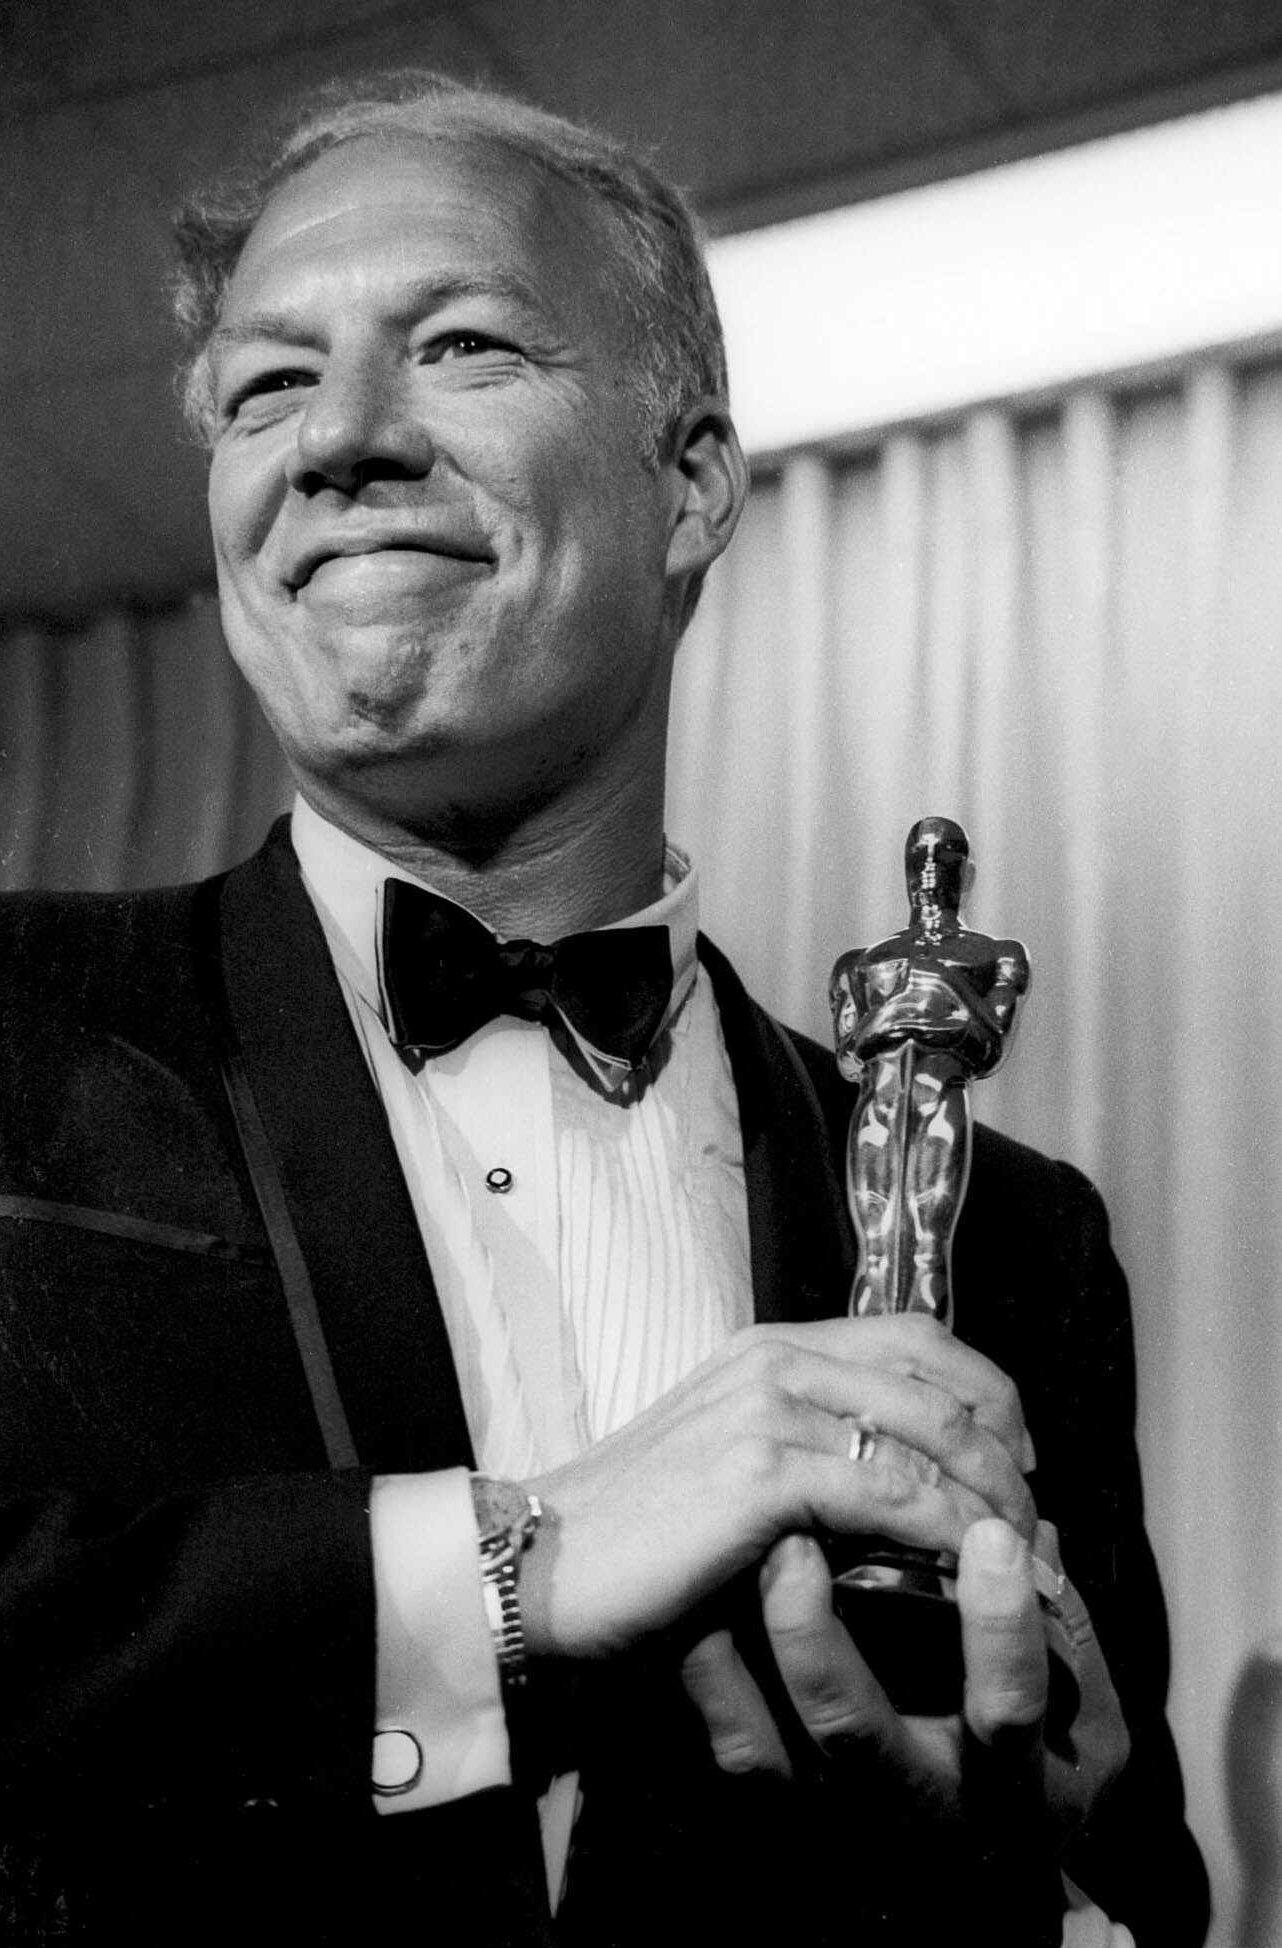 Oscar-winning Cool Hand Luke actor George Kennedy dies at 